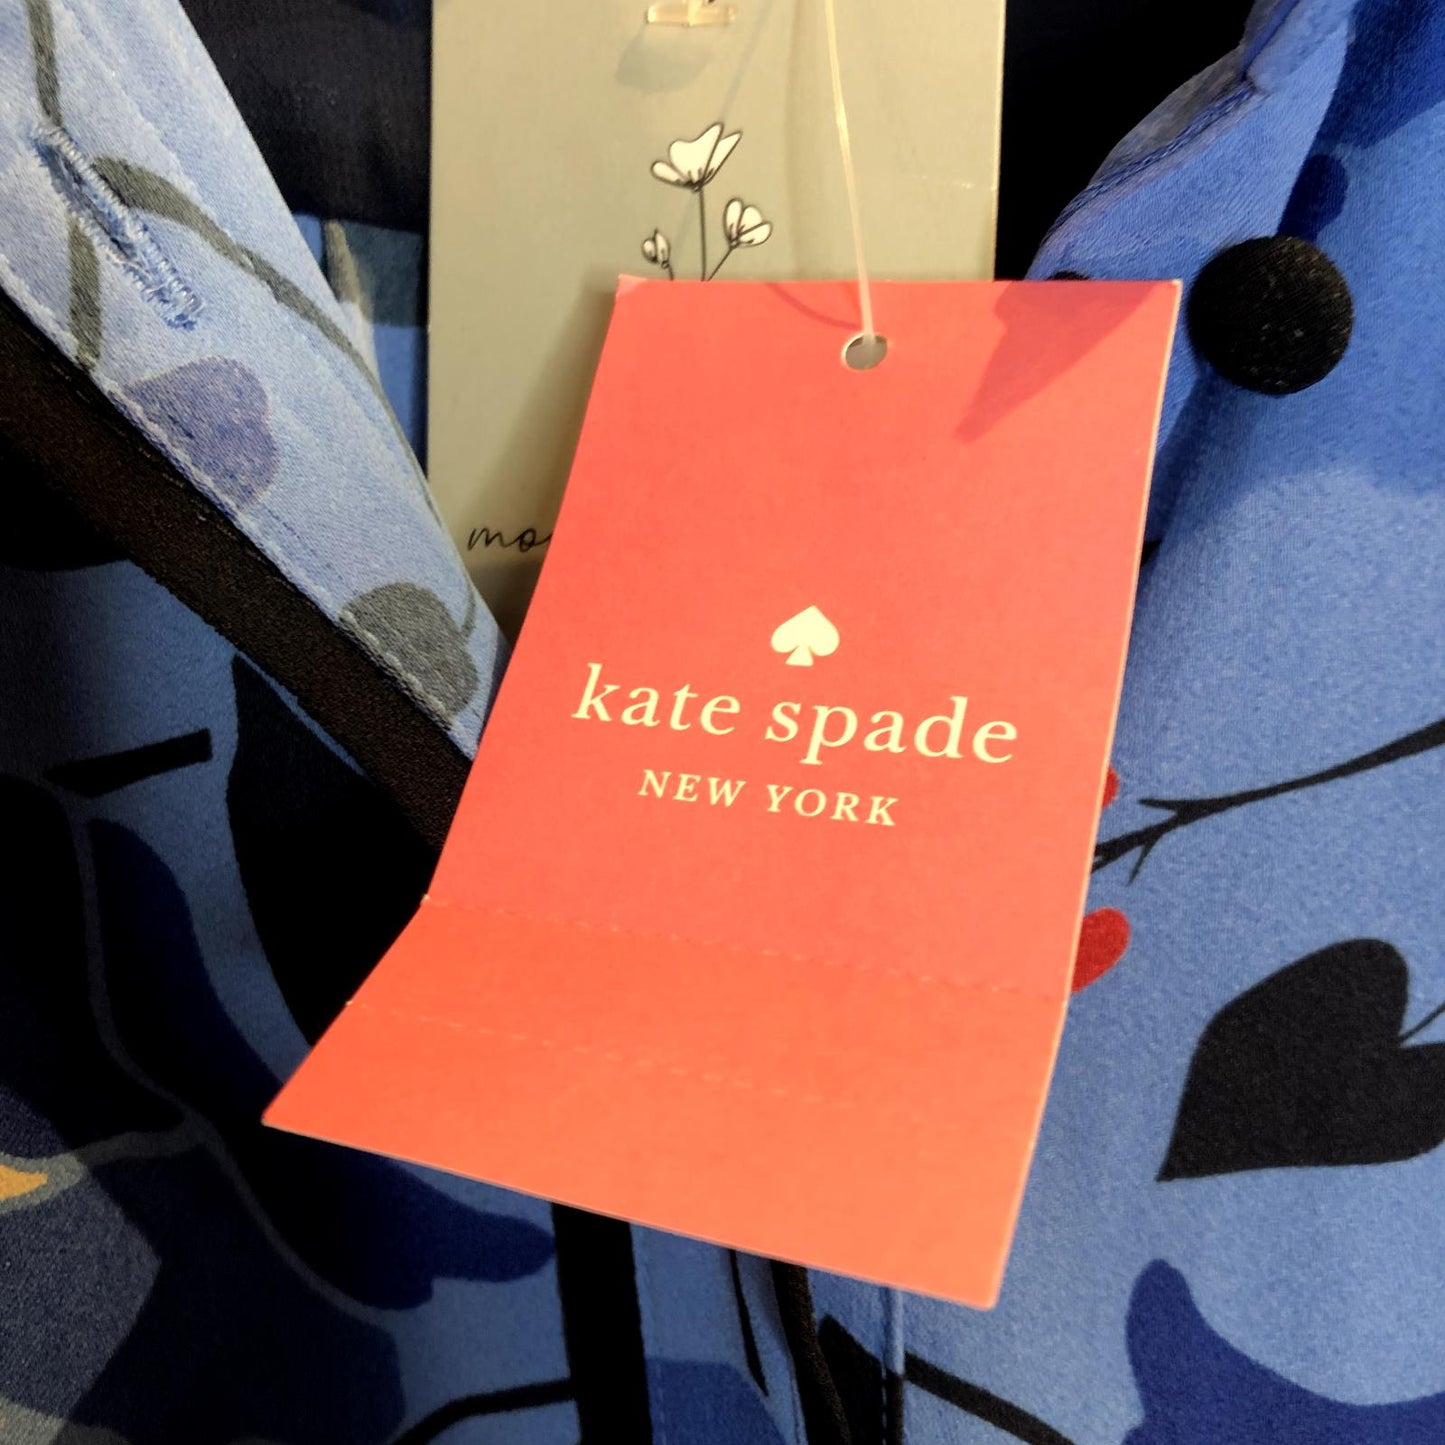 8 - Kate Spade $369 Blue Fluid Floral Button Up Short Sleeve Dress NEW 0517JB